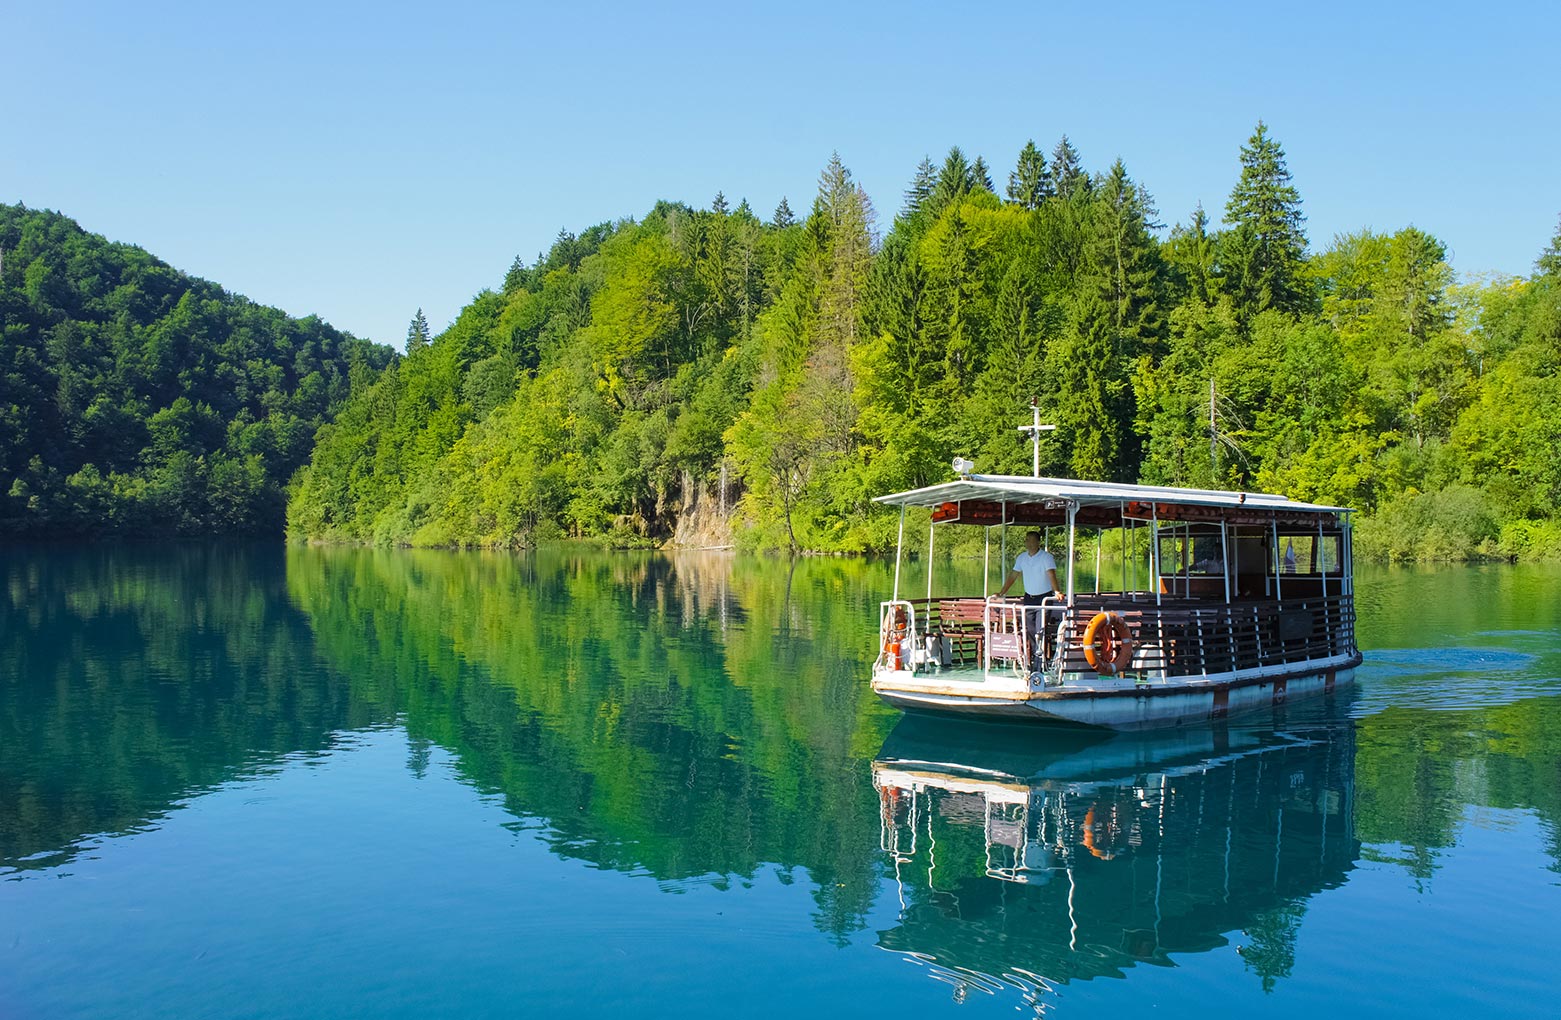 Boat ride across Lake Kozjak - Plitvice Lakes National Park